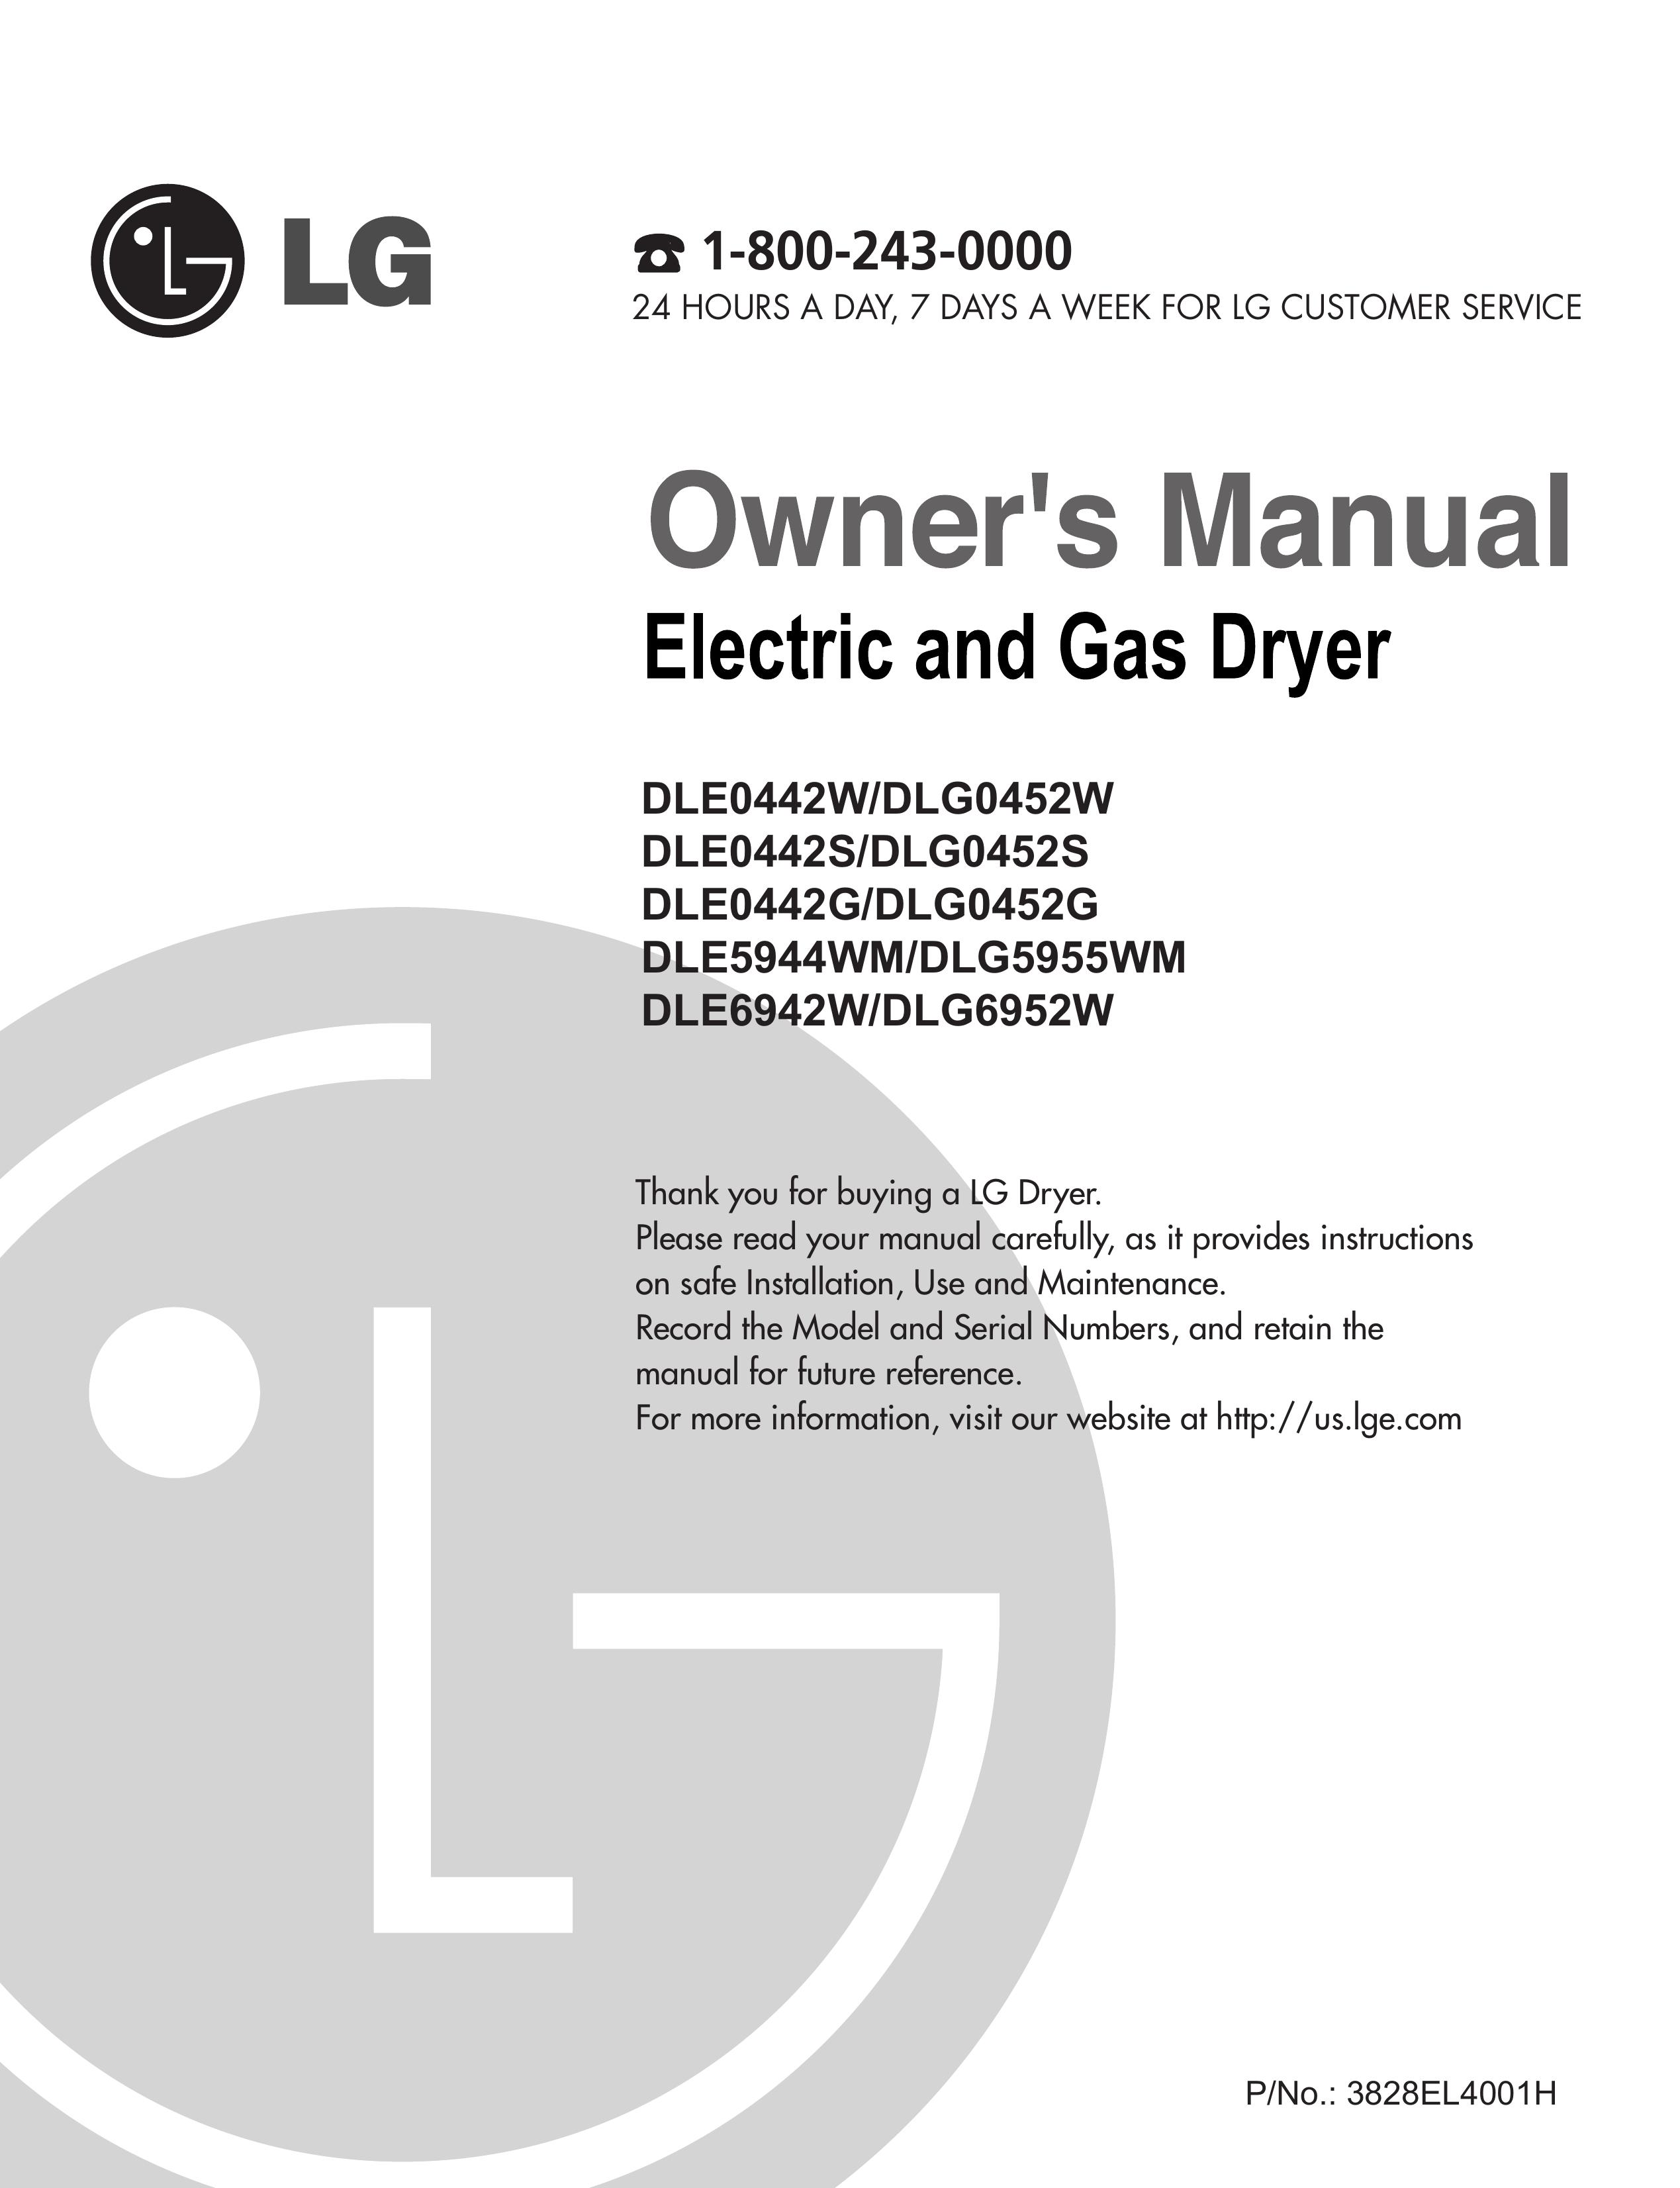 LG Electronics D0452G Clothes Dryer User Manual